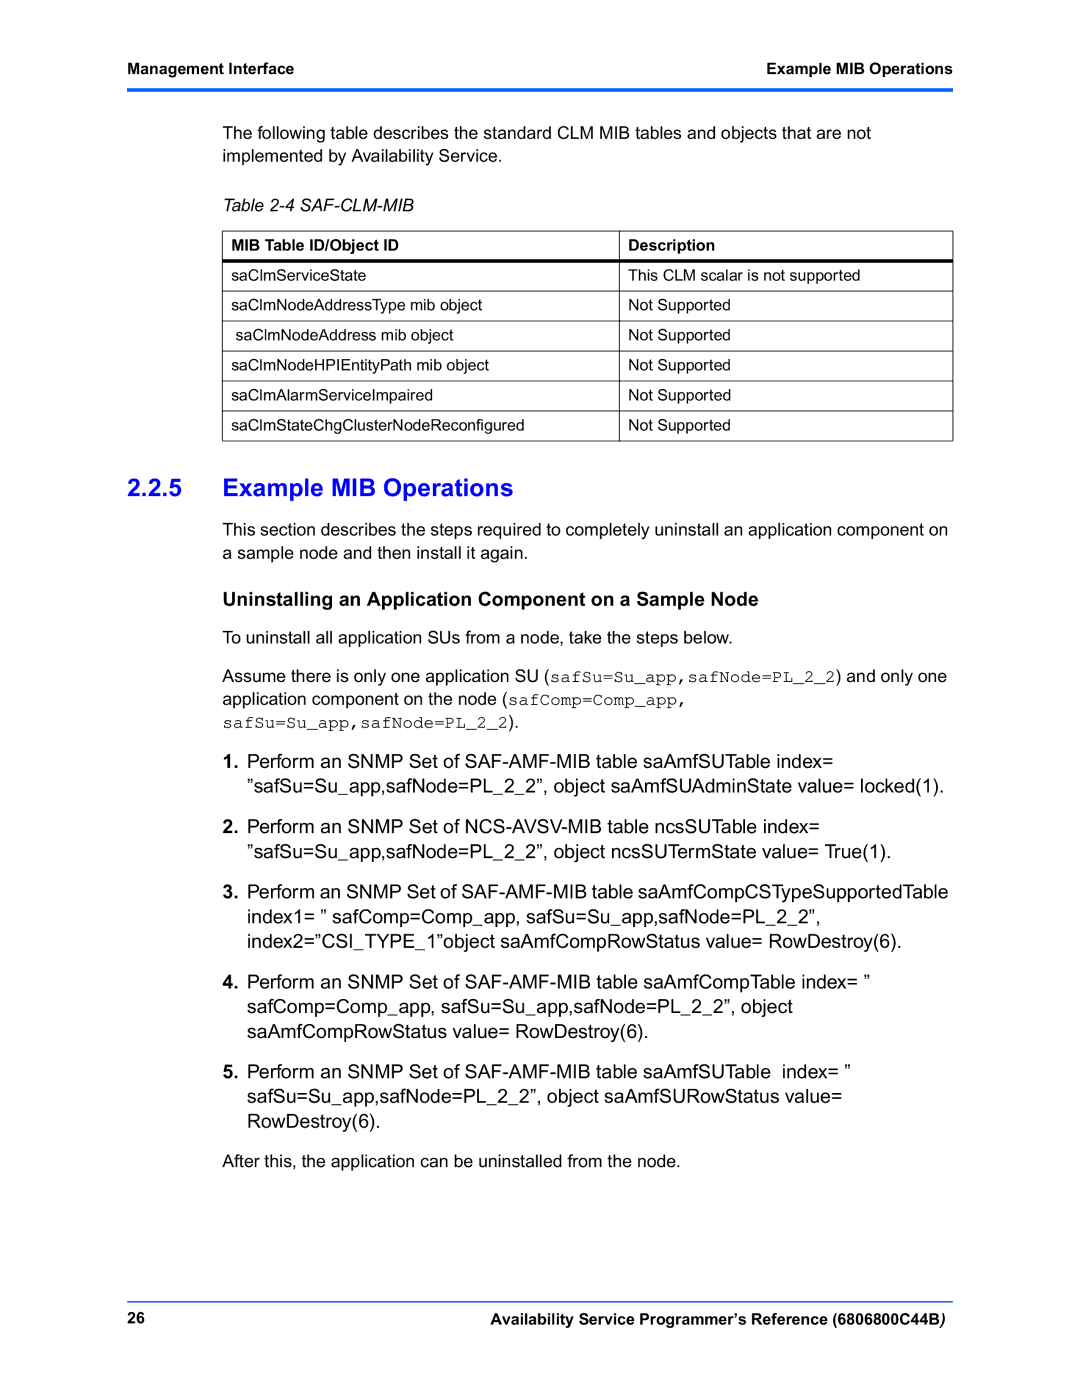 Motorola 6806800C44B manual Saf-Clm-Mib, Management Interface Example MIB Operations 